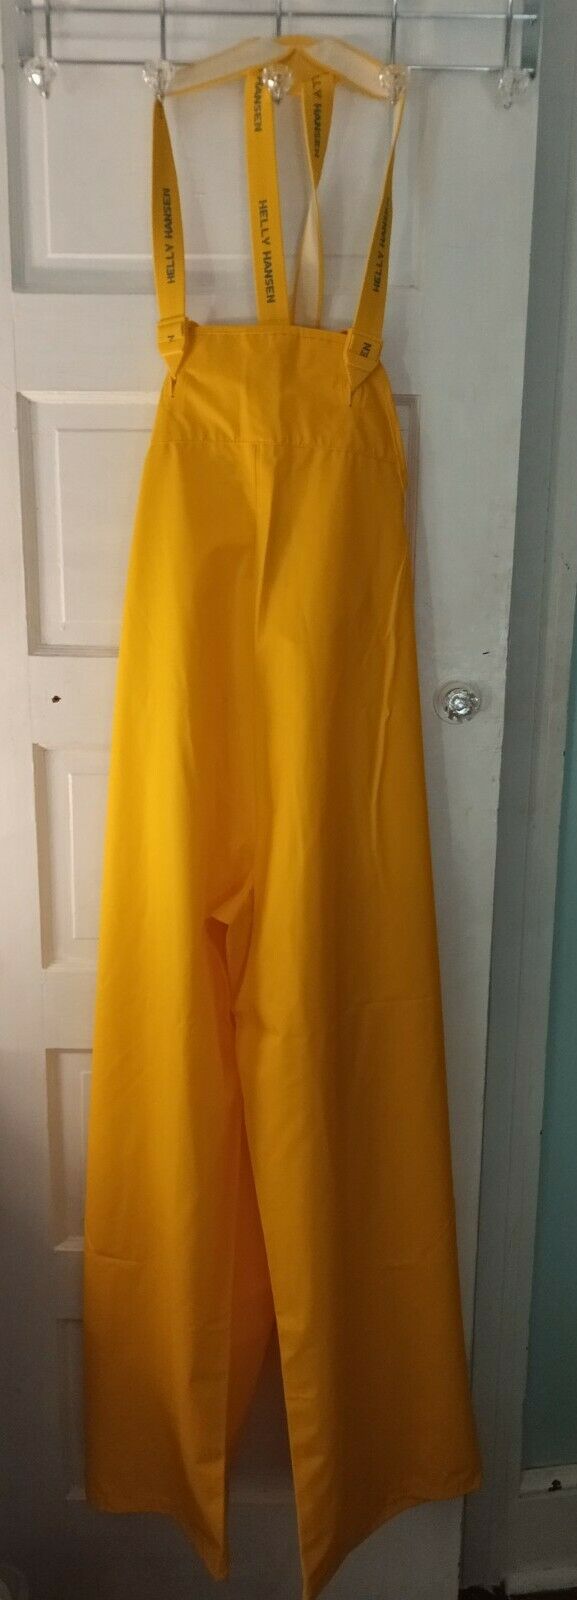 Nwt Helly Hansen Work Wear Men's Yellow Bib Rain Fishing Pants Large 54-56 Pvc